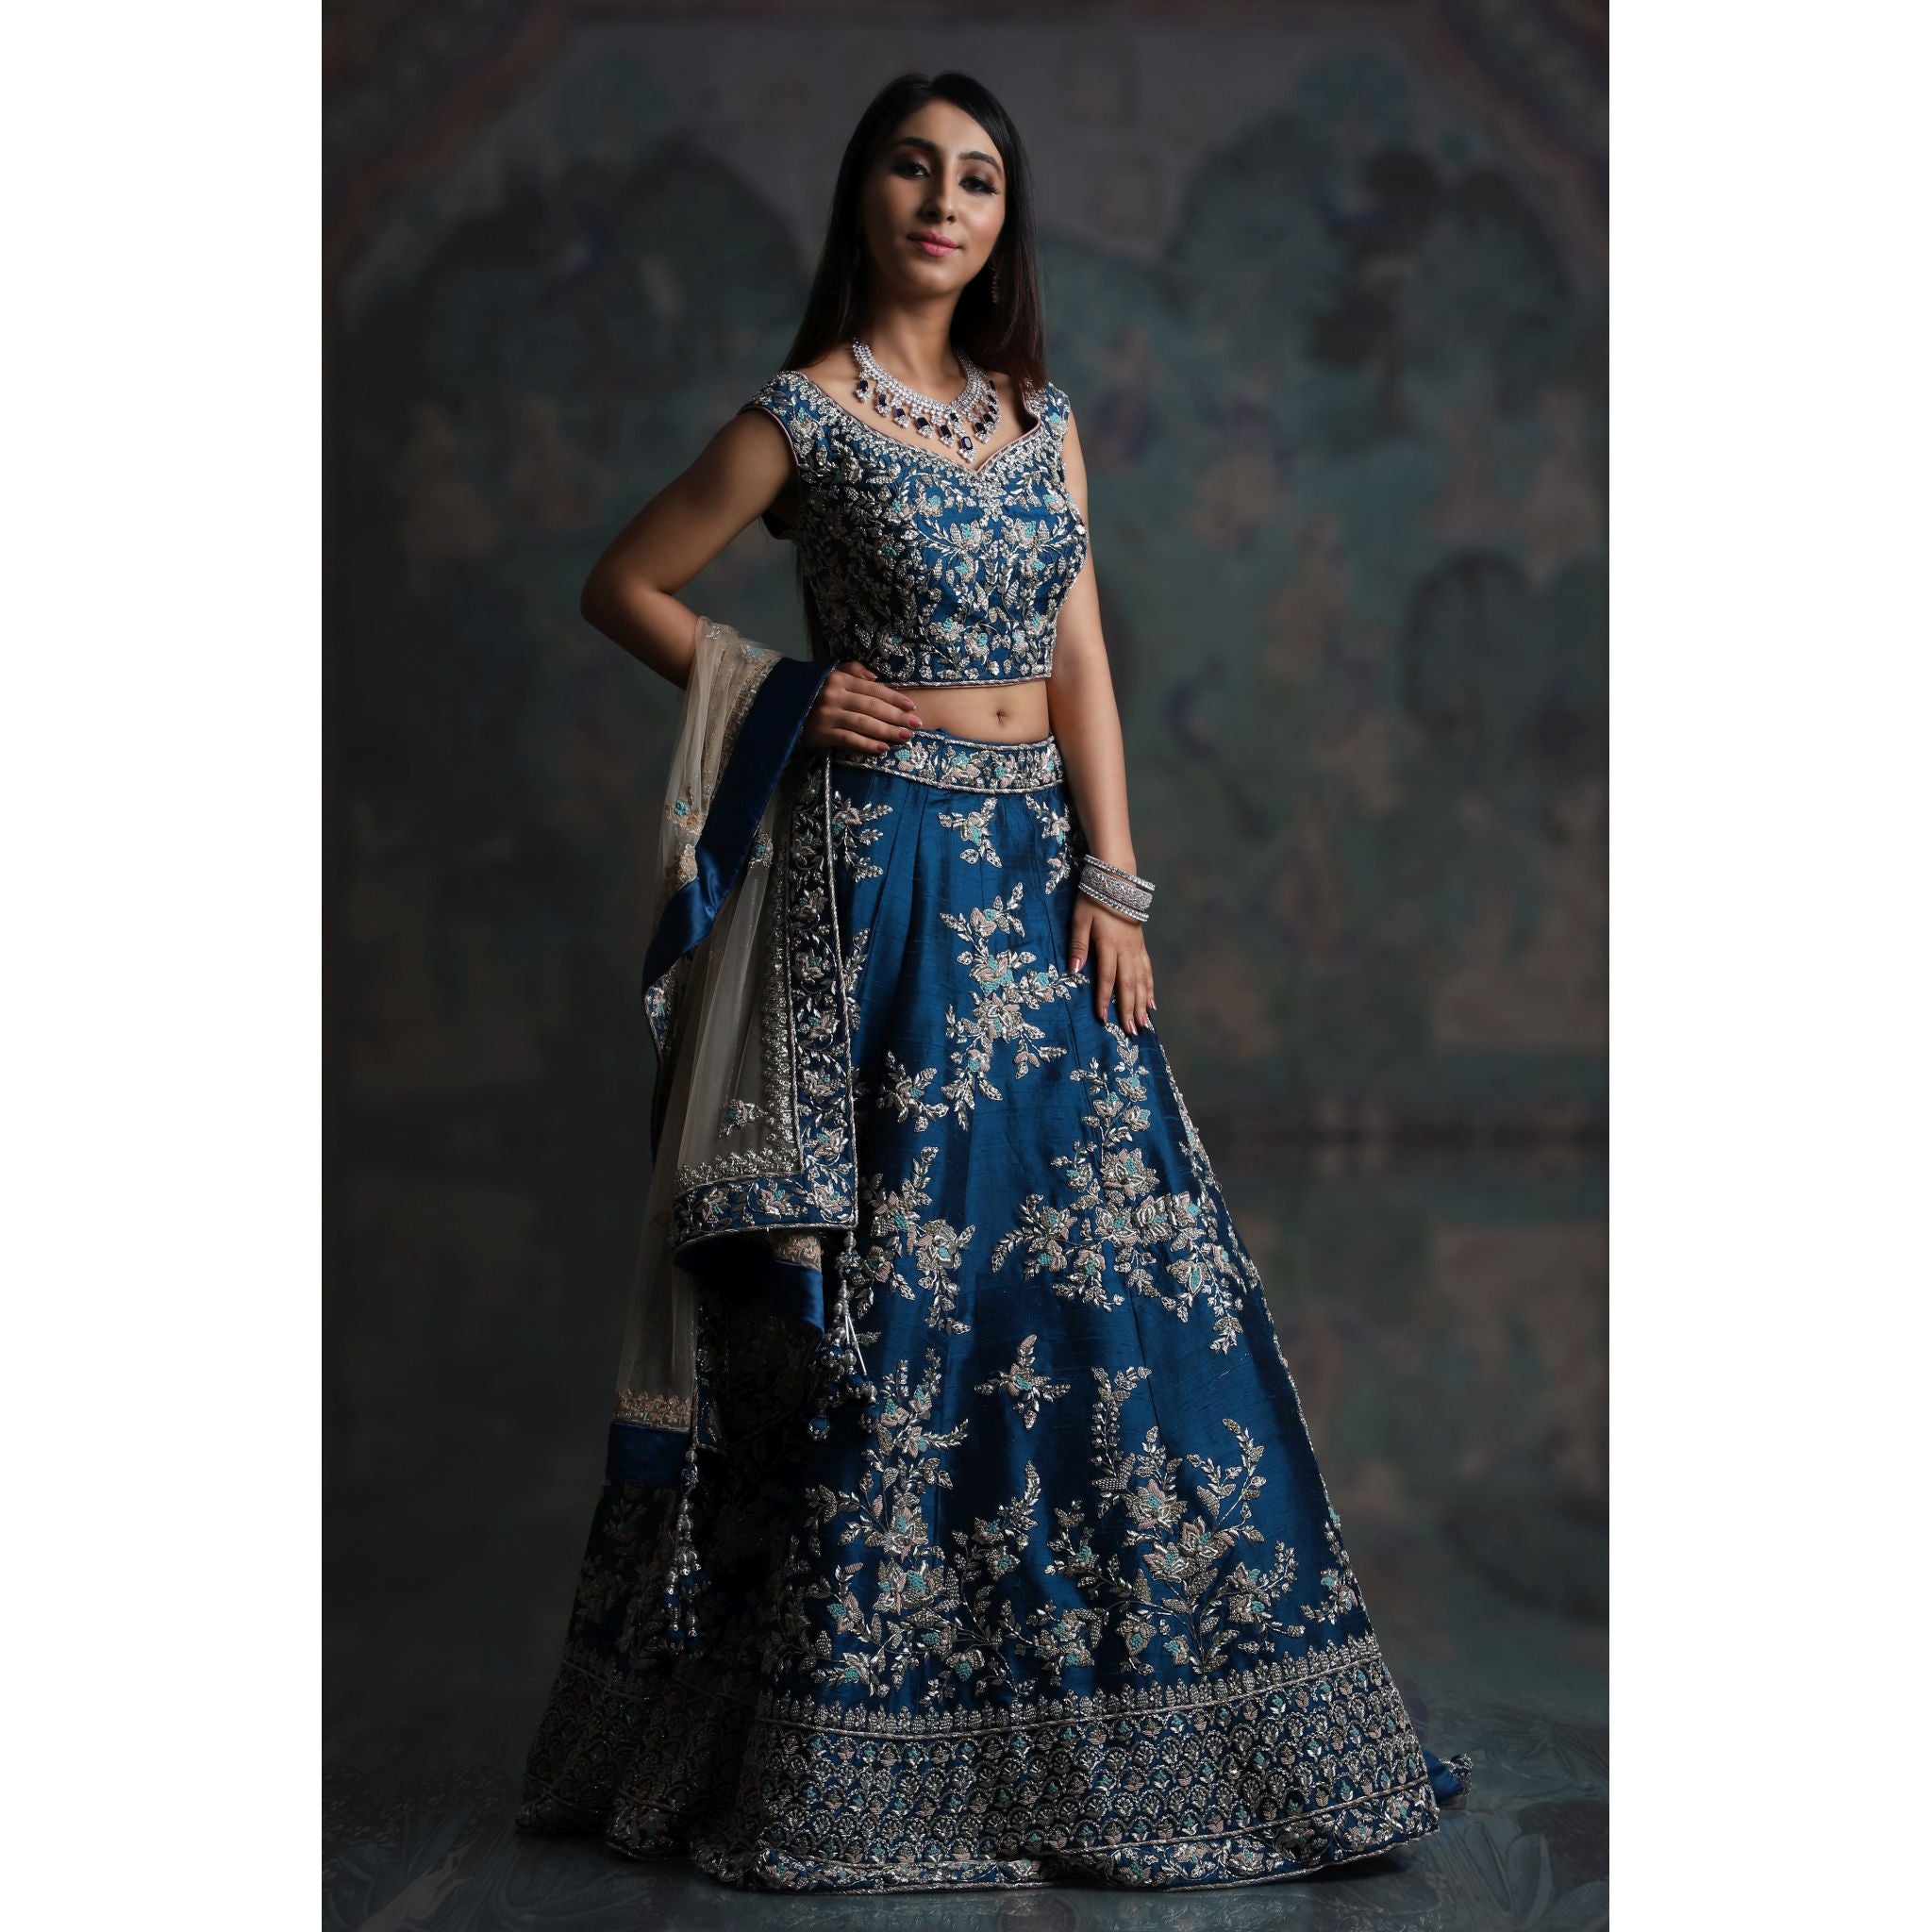 Teal Blue Lehenga - Indian Designer Bridal Wedding Outfit